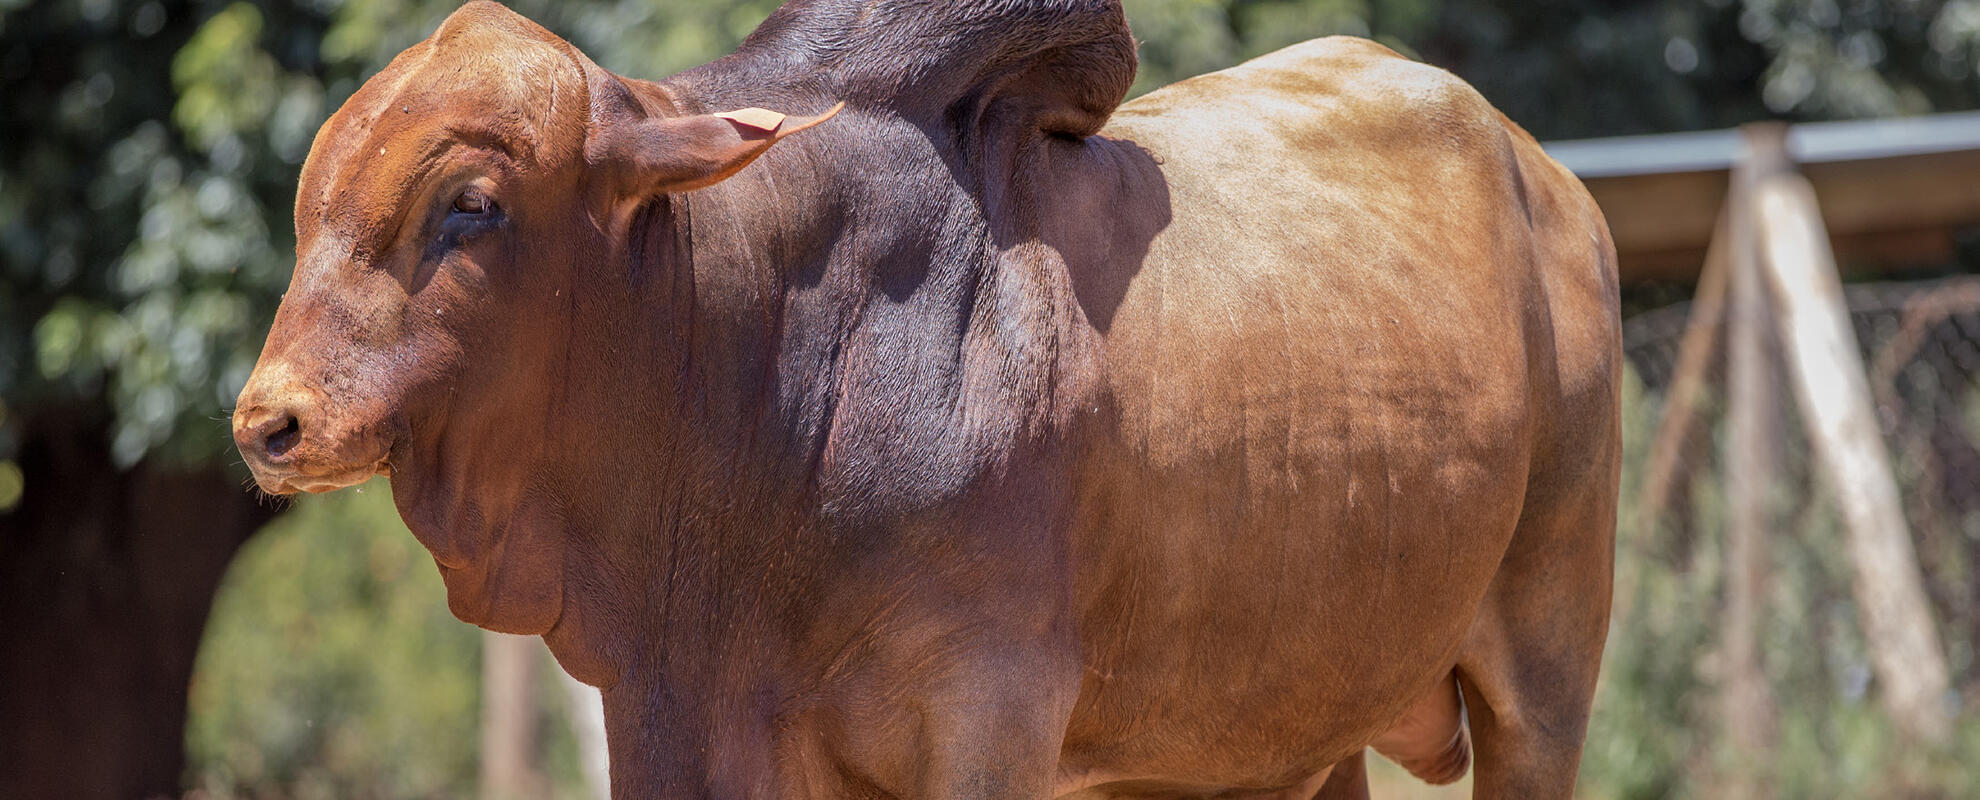 Mzima livestock project